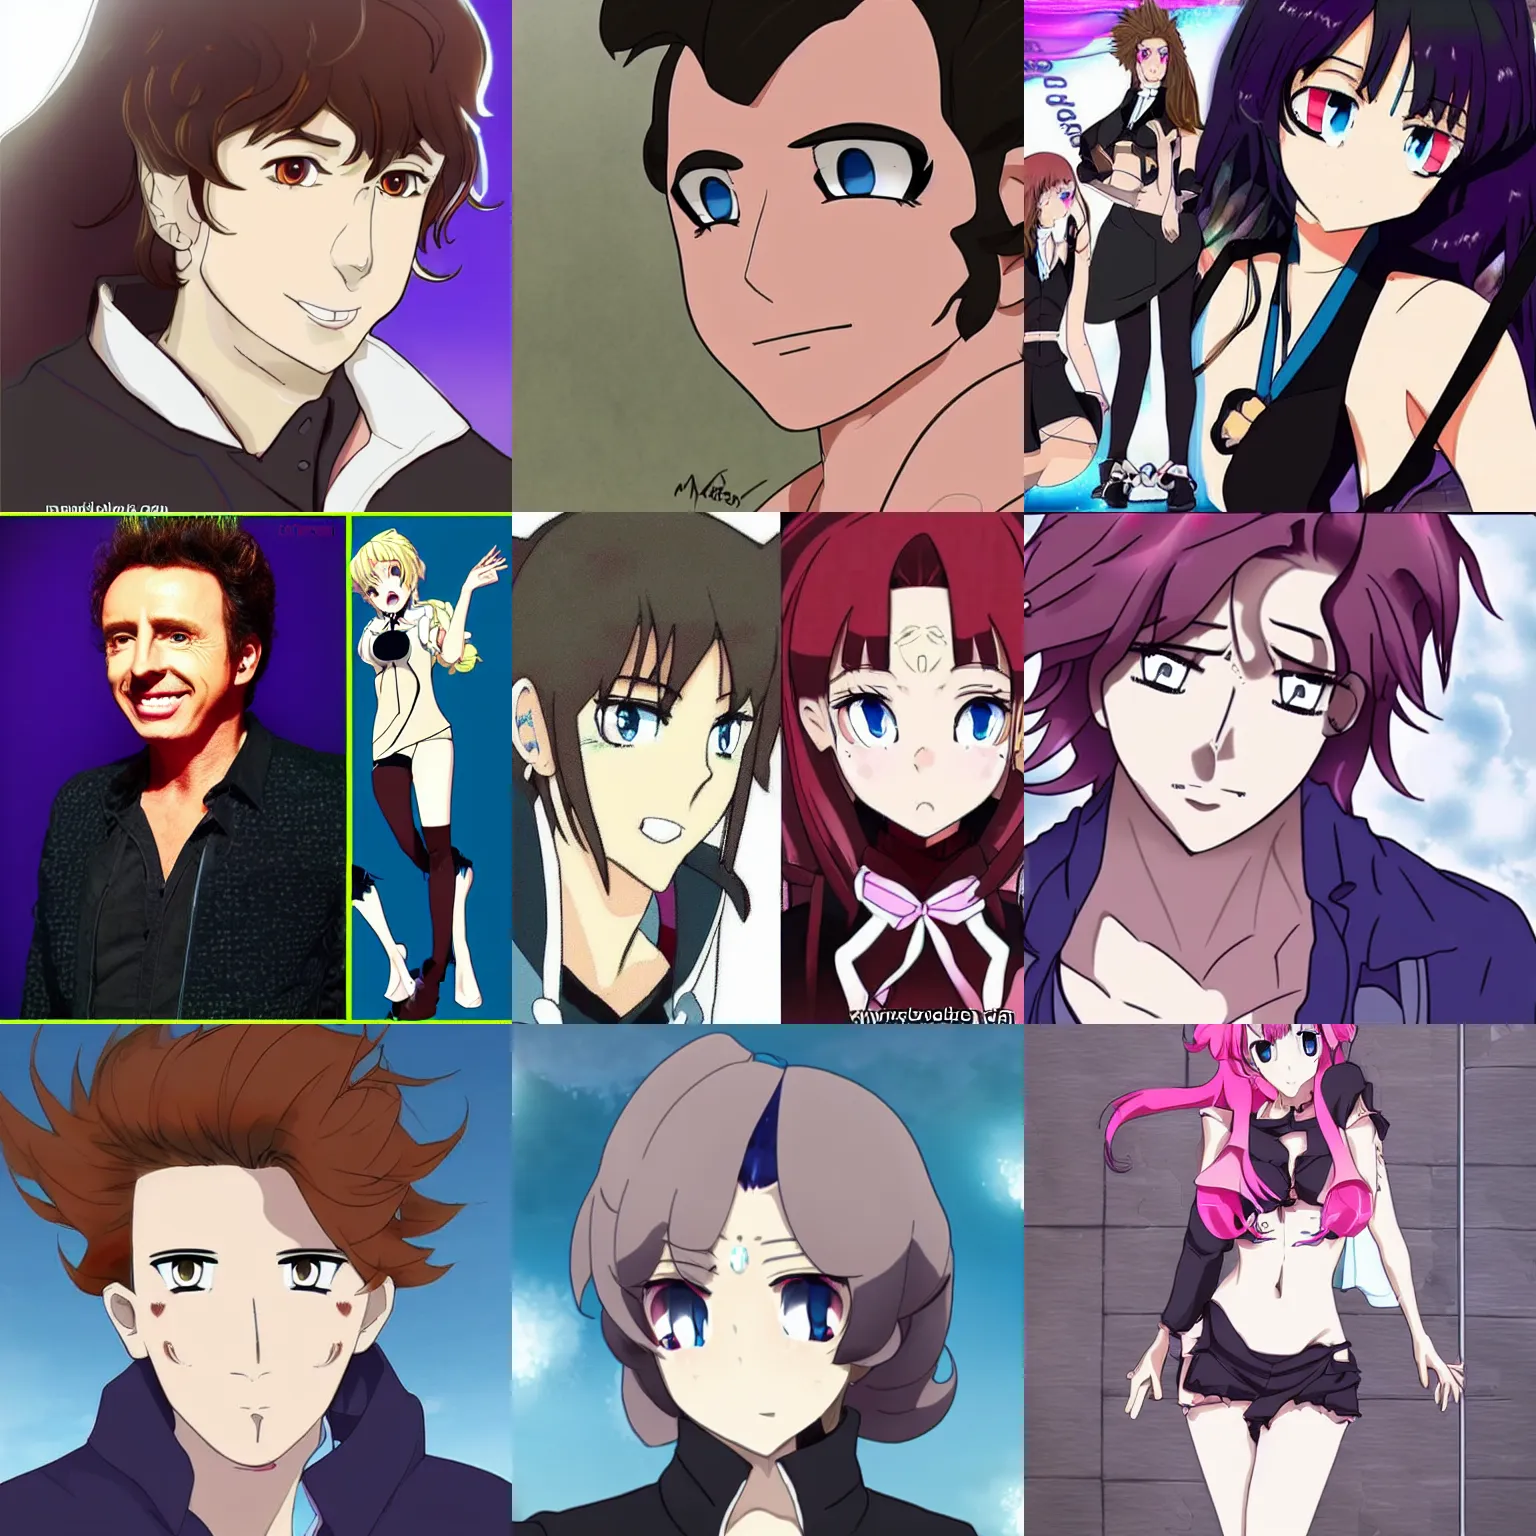 Prompt: Marco Borsato genderswap anime waifu